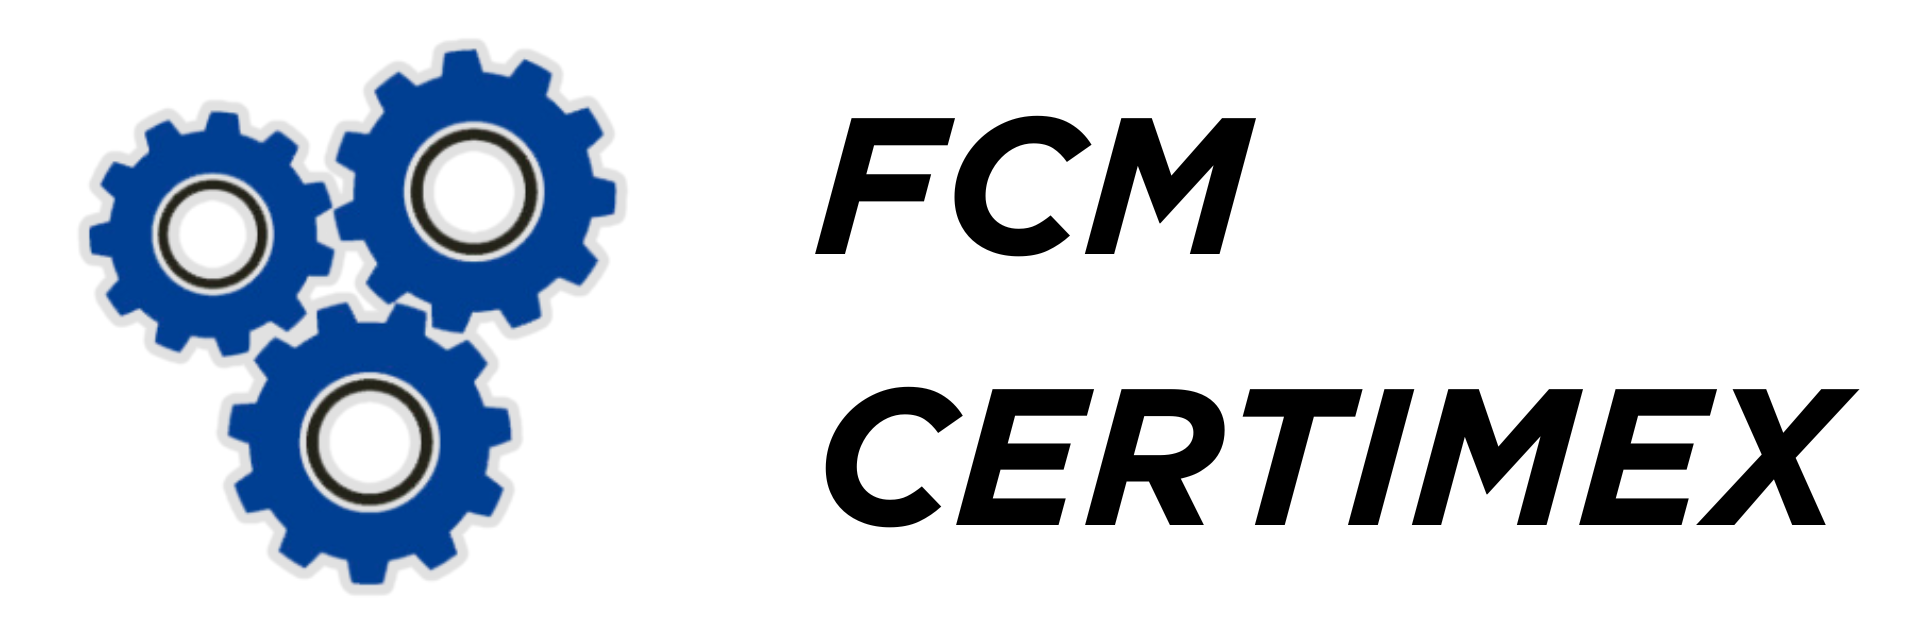 FCM CERTIMEX LOGO